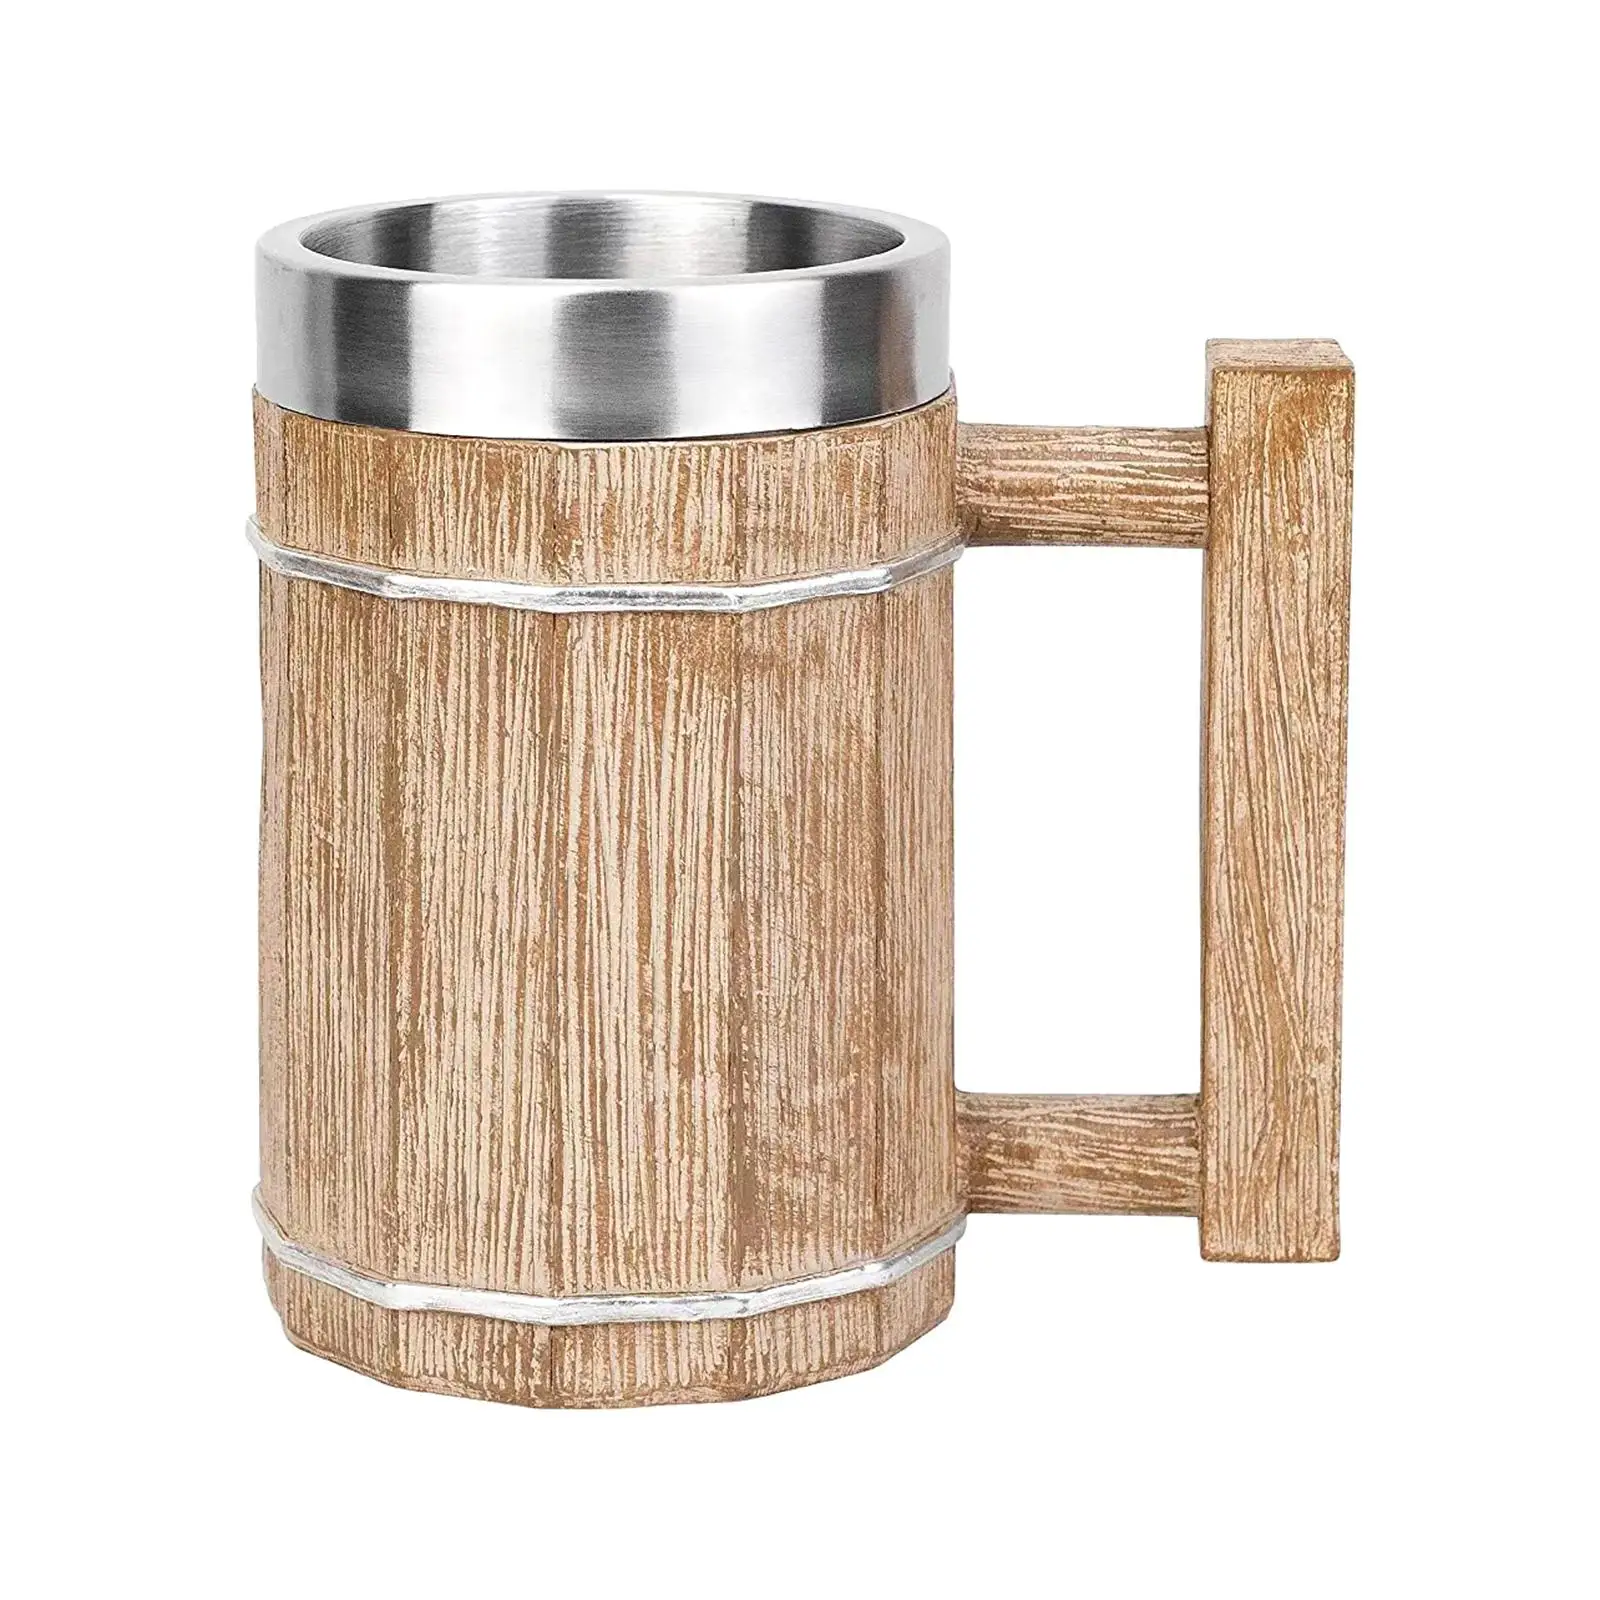 Barrel Beer Mug 600ml Bucket Shaped Drinkware Retro Centerpiece Novelty Gift Portable Tea Cup for Home Parties Bar Camping Dorm